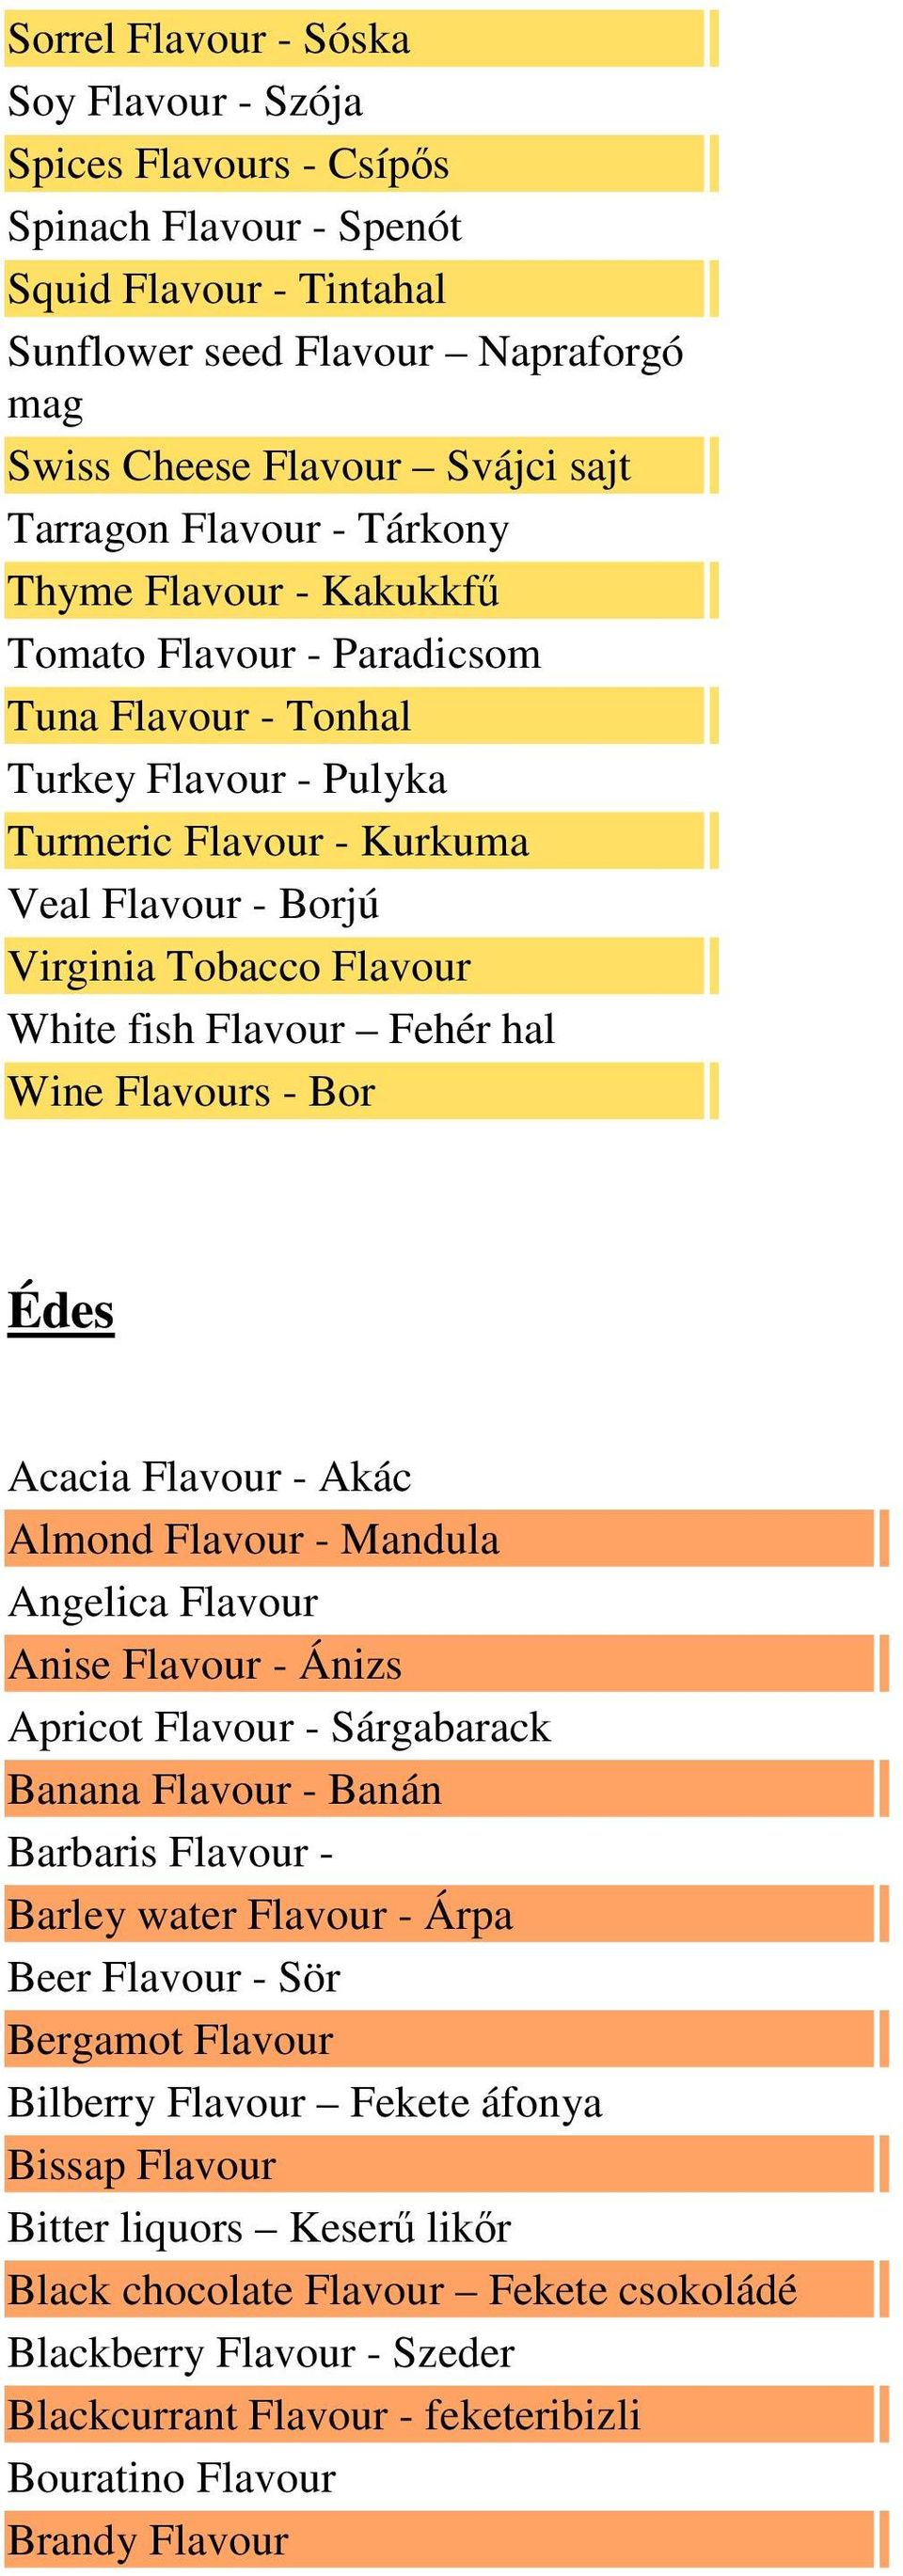 fish Flavour Fehér hal Wine Flavours - Bor Édes Acacia Flavour - Akác Almond Flavour - Mandula Angelica Flavour Anise Flavour - Ánizs Apricot Flavour - Sárgabarack Banana Flavour - Banán Barbaris